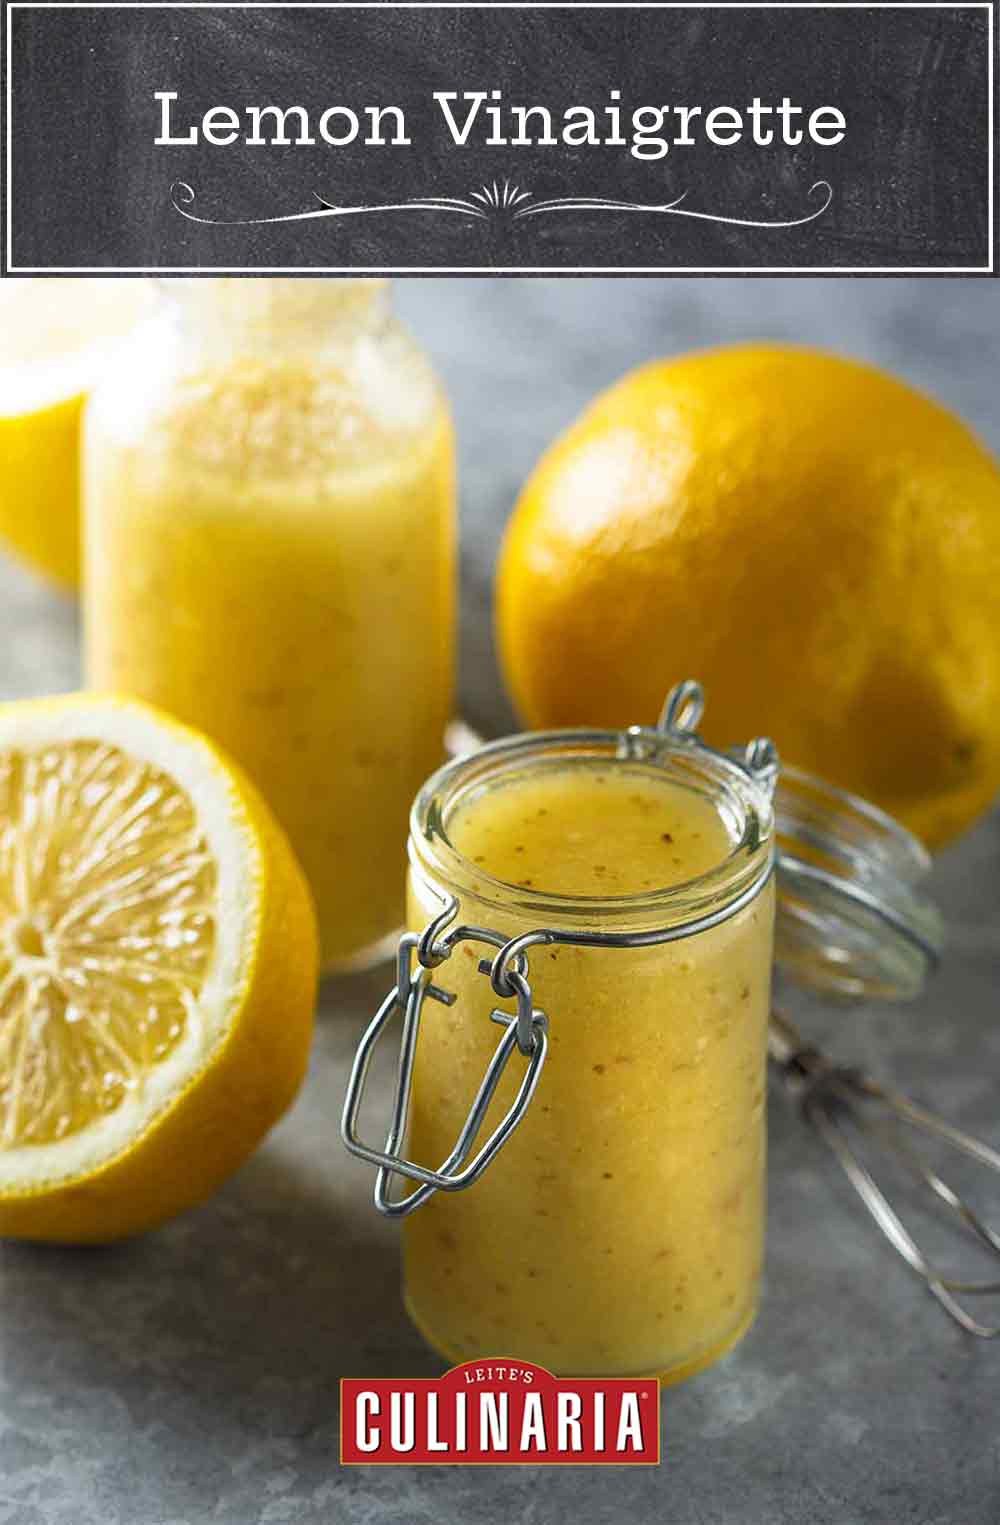 Two jars of lemon vinaigrette, two lemon halves, and a wire whisk.